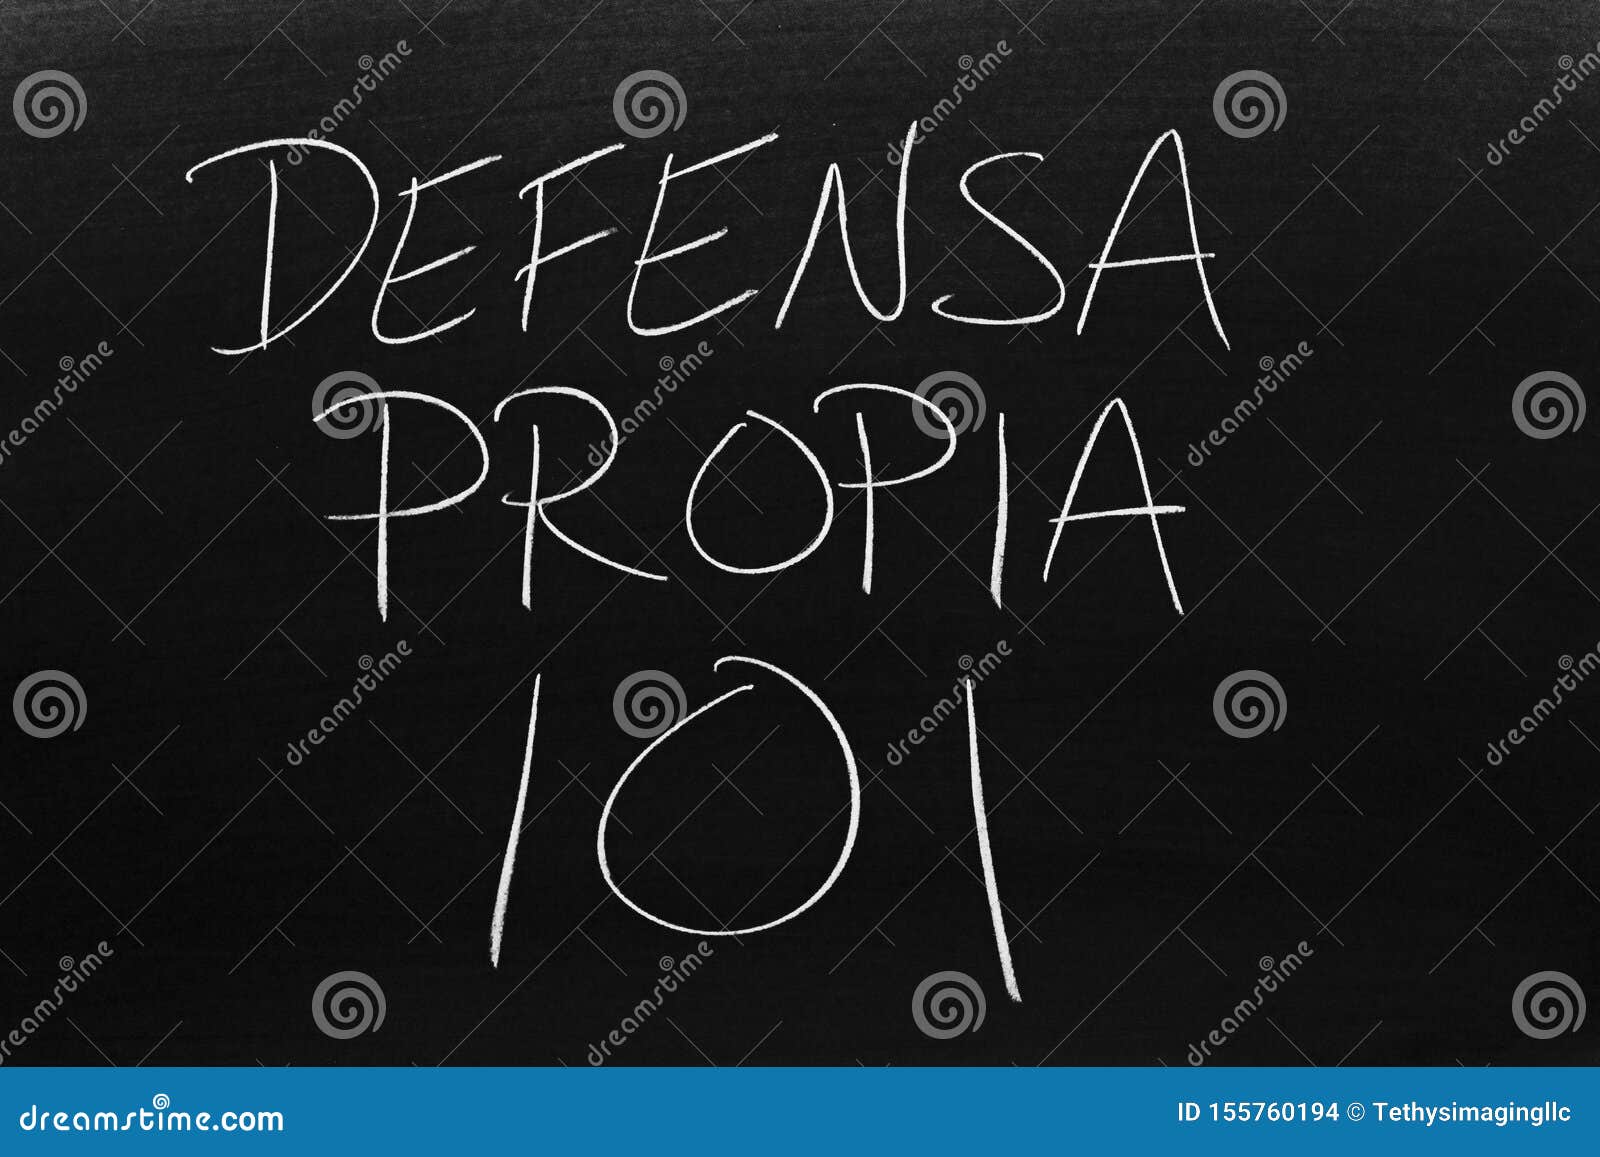 defensa propia 101 on a blackboard.  translation: self defense 101